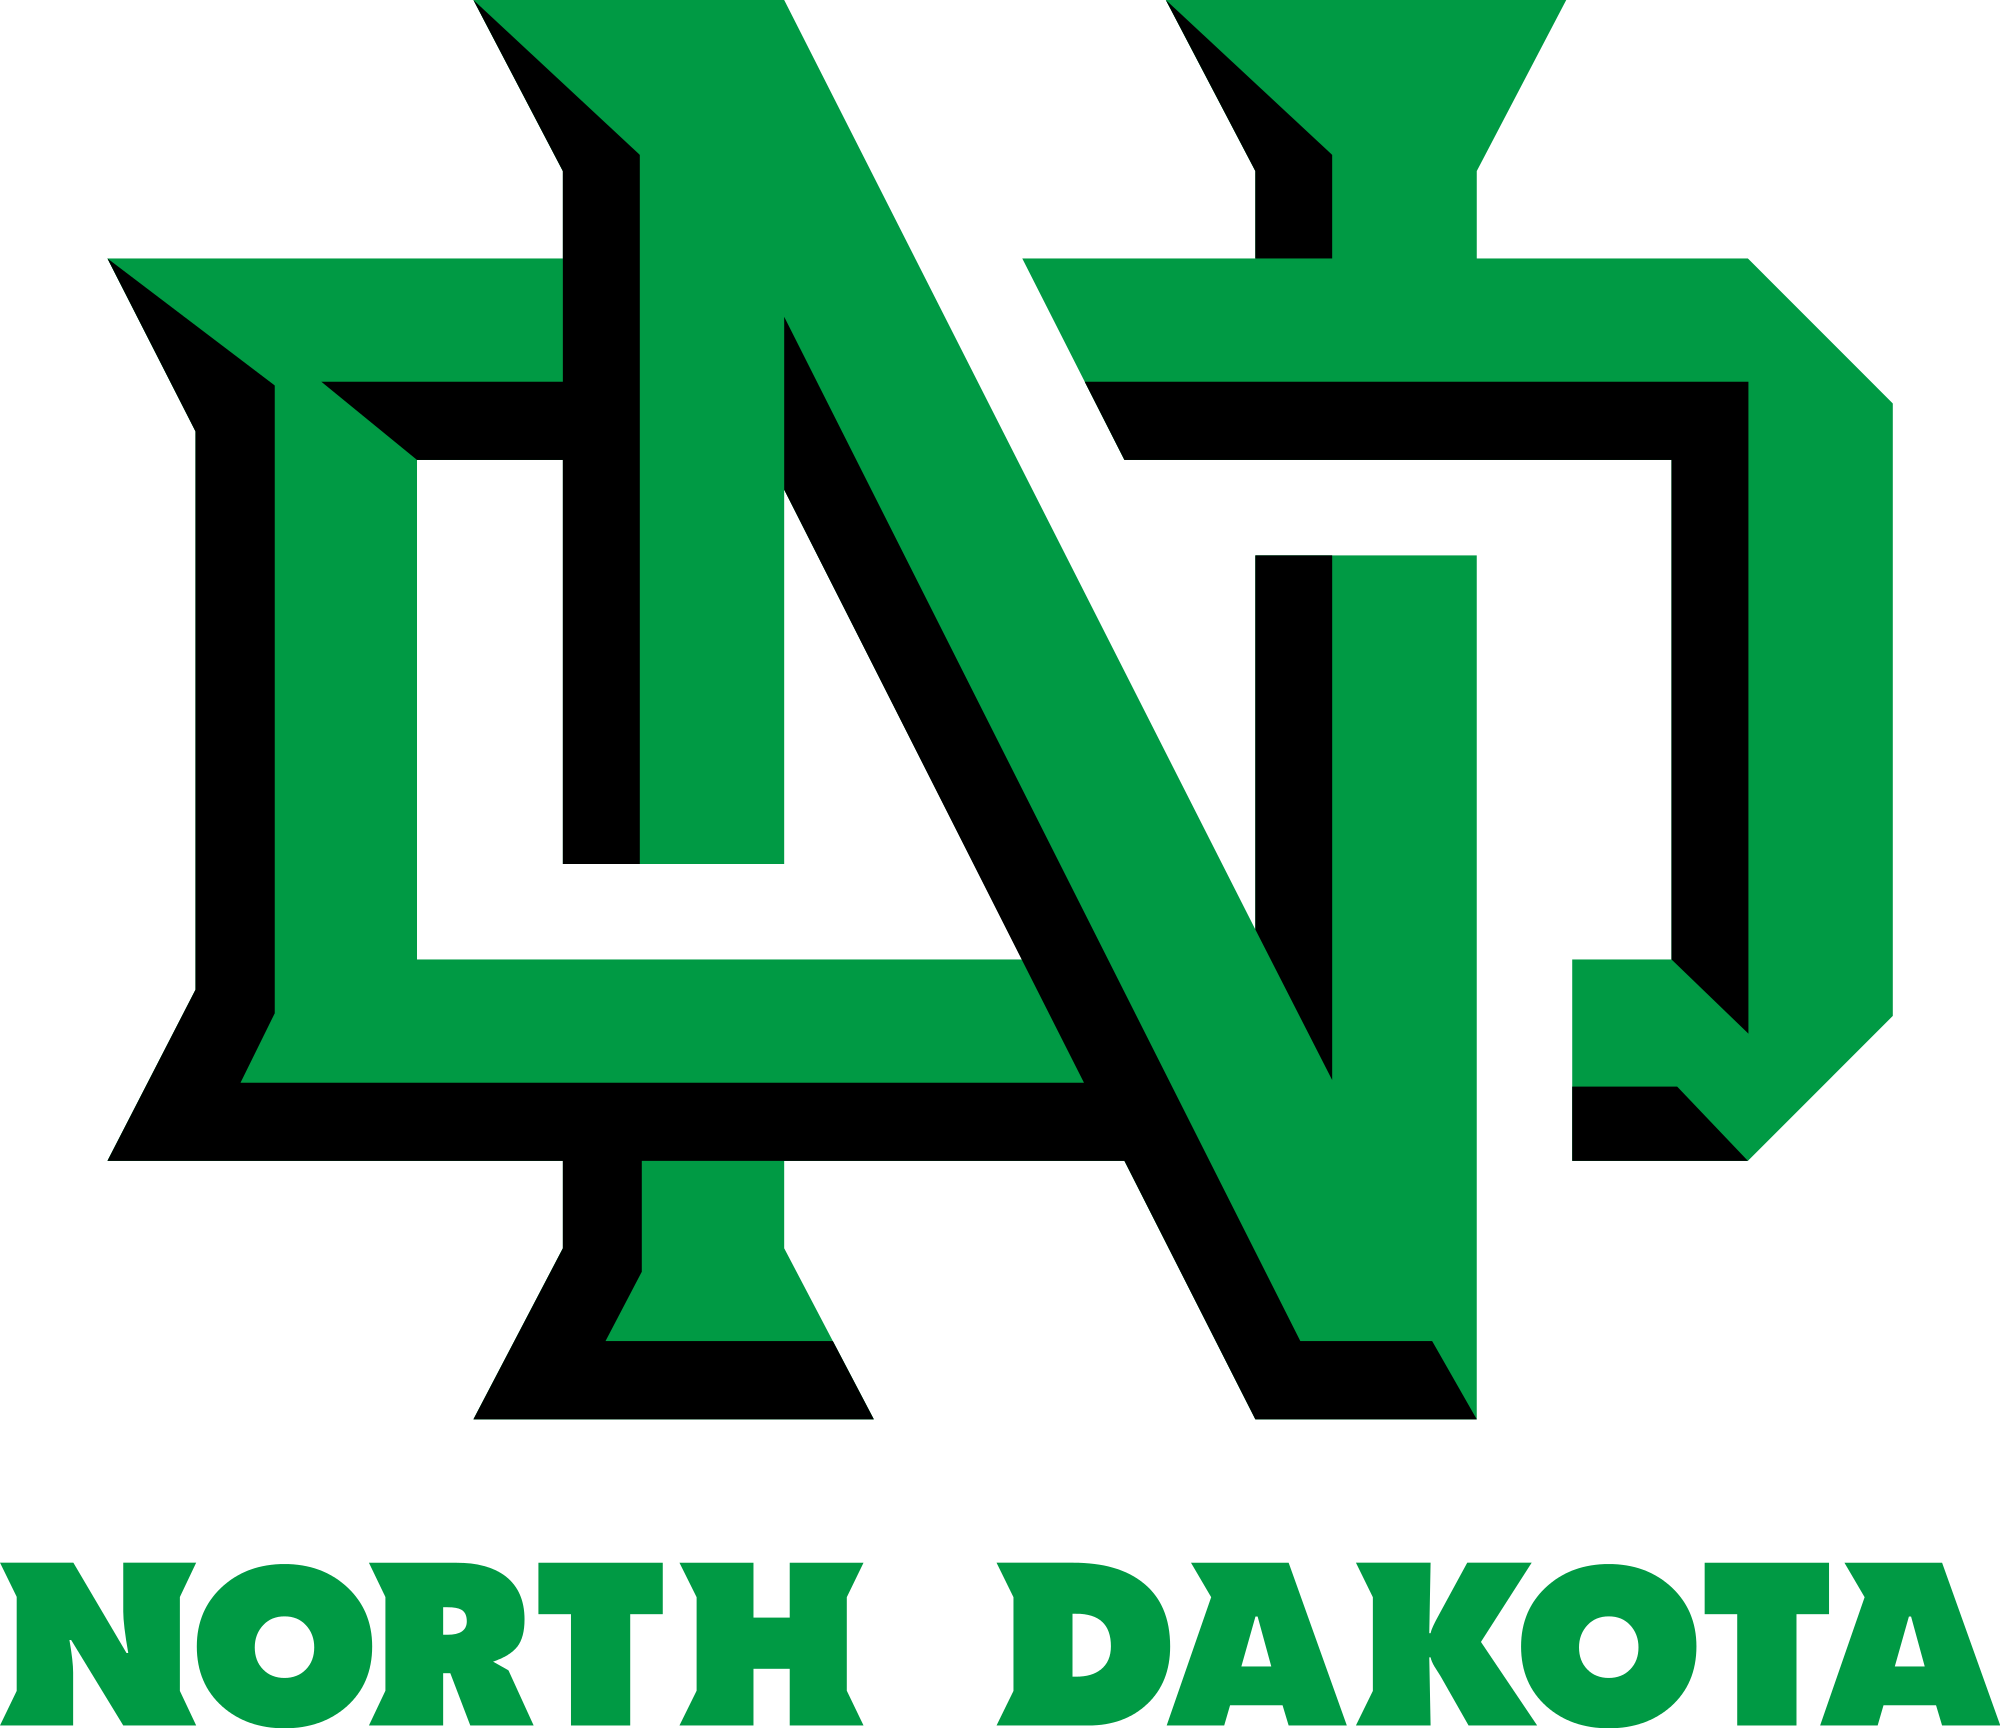 North Dakota PNG - 134879